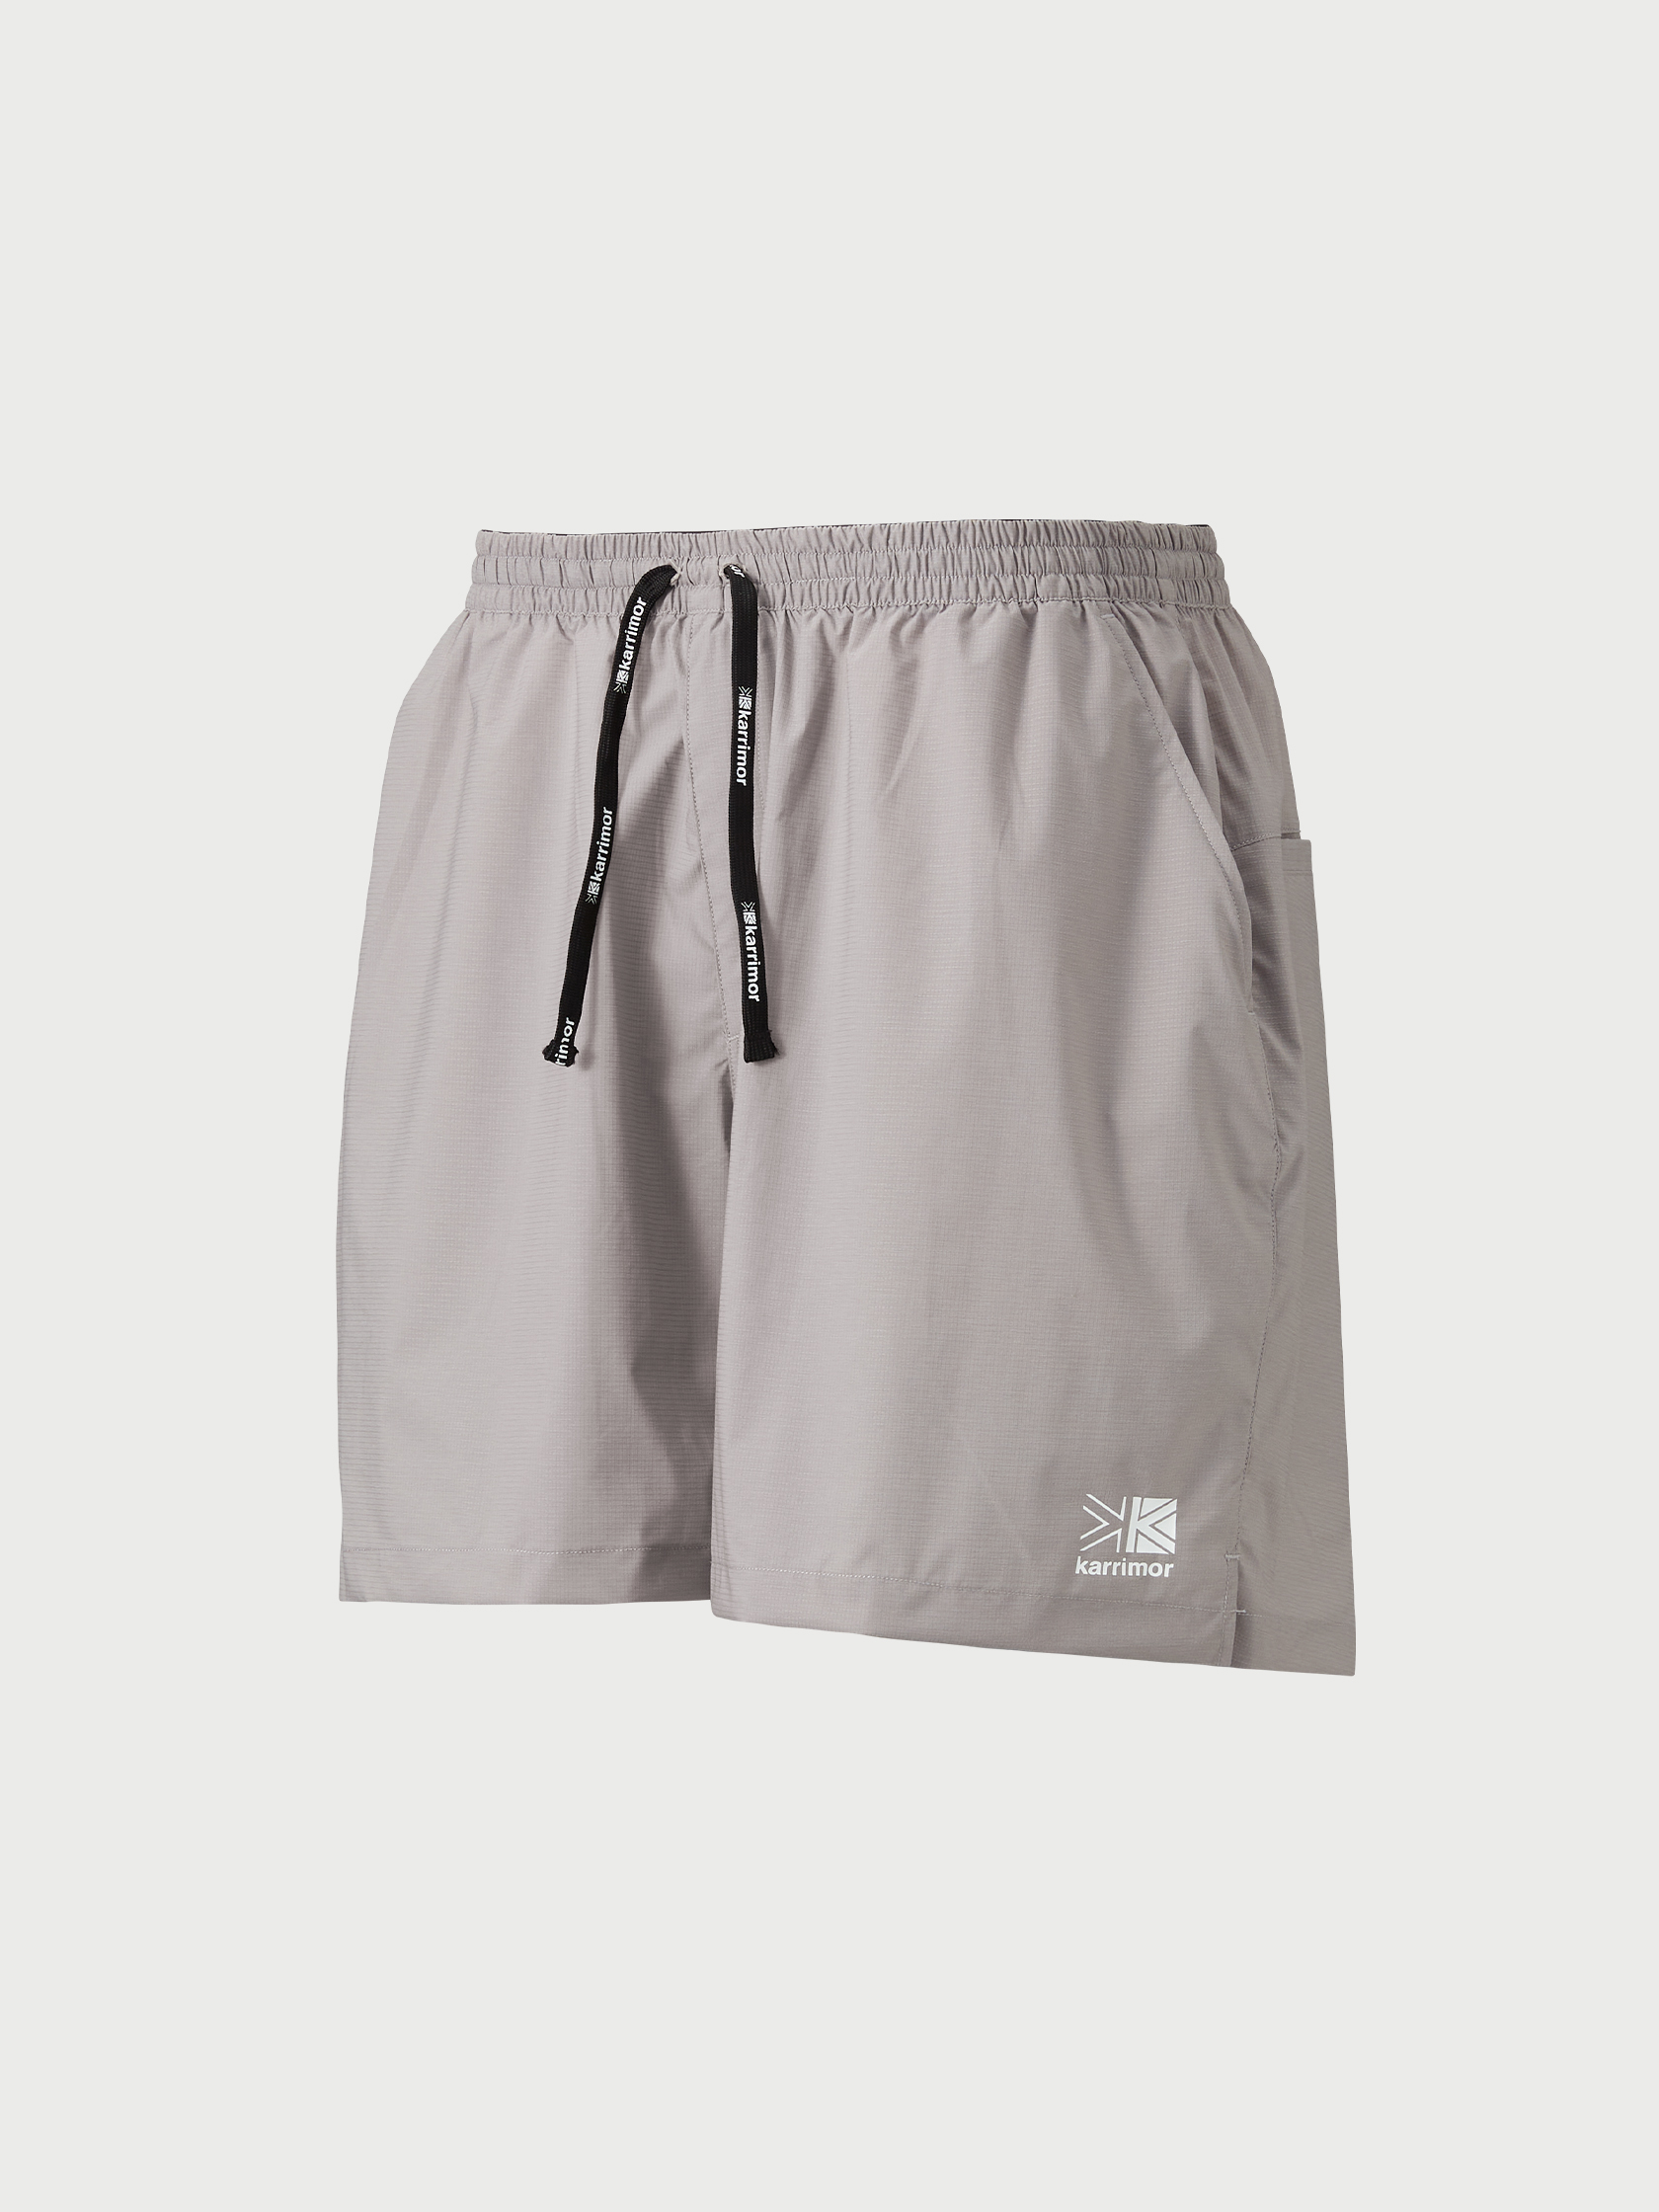 active light shorts | カリマー | リュックサック・アウトドアウェア | karrimor official